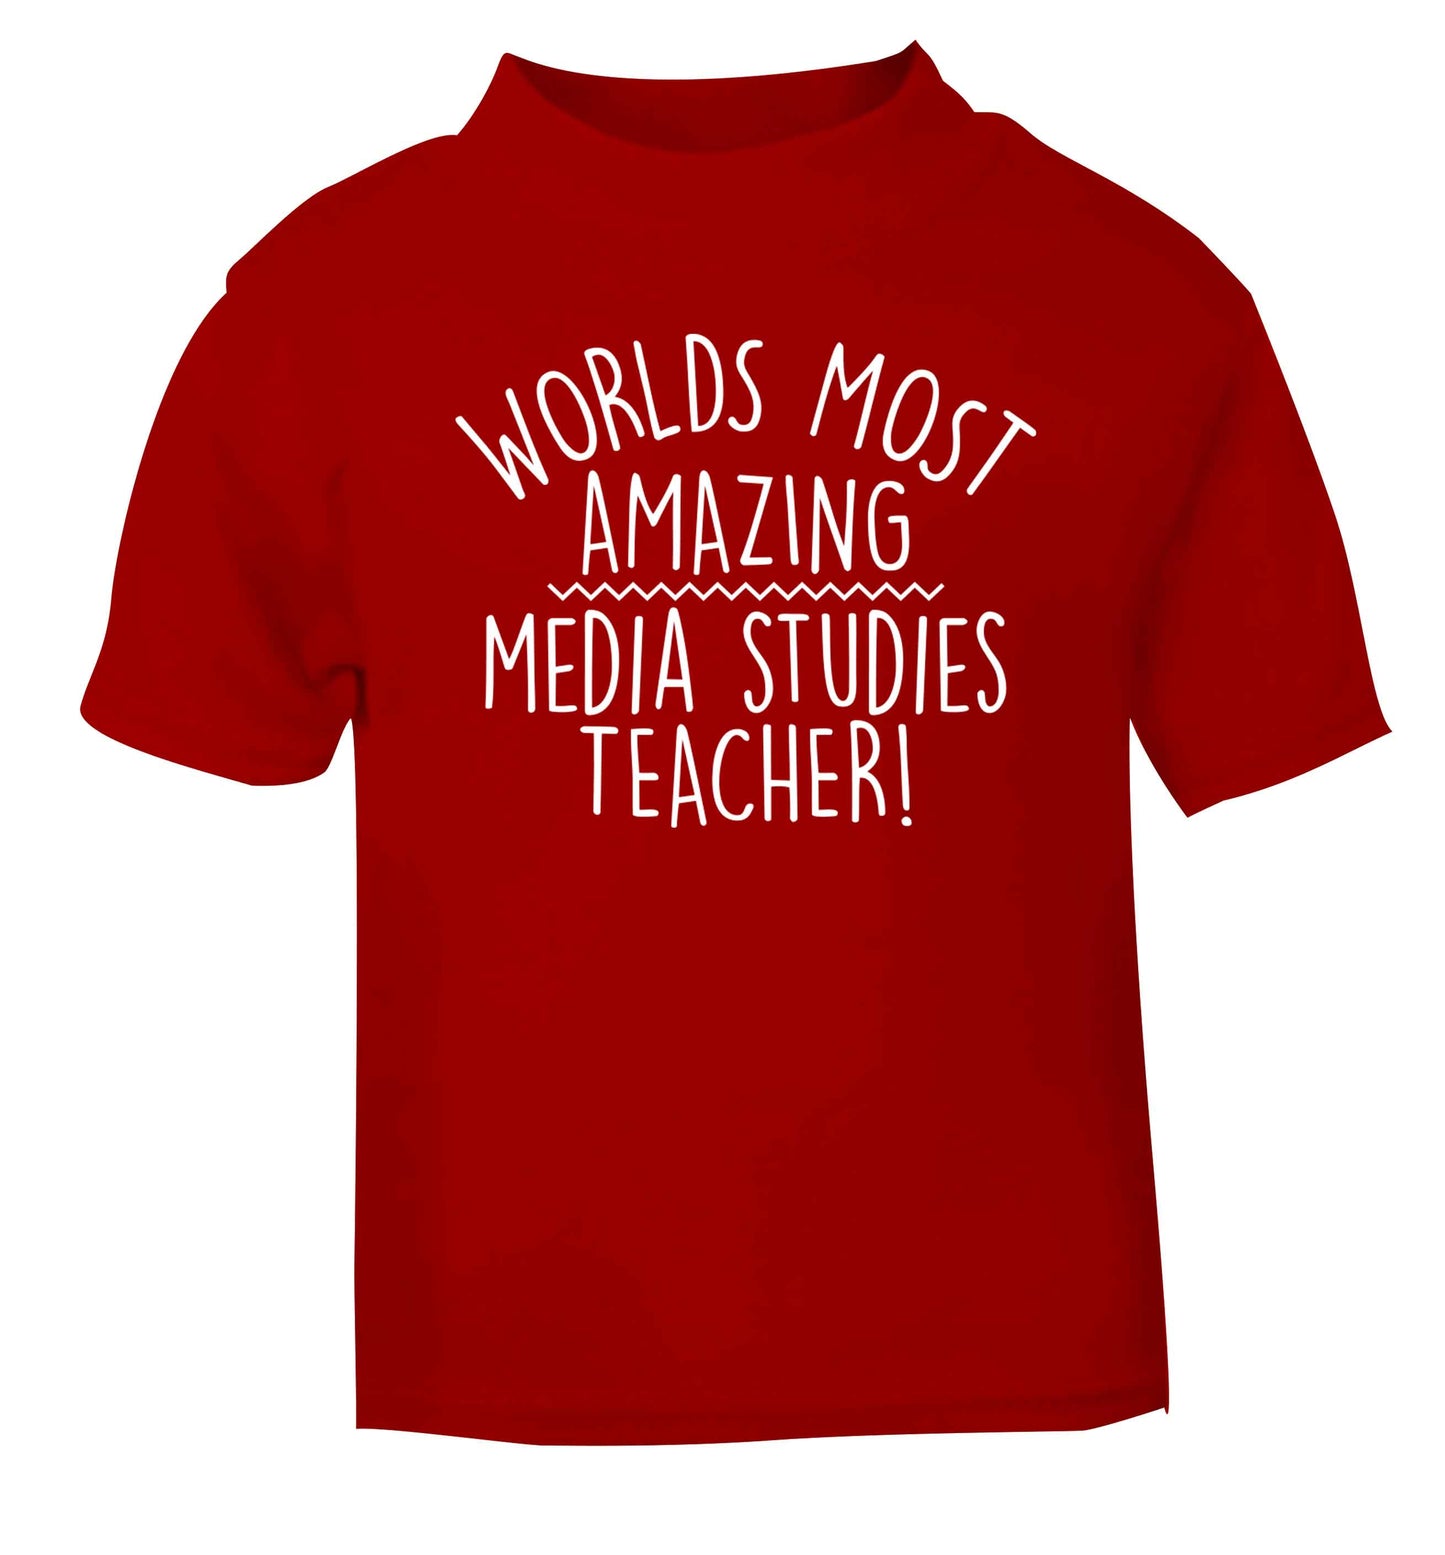 Worlds most amazing media studies teacher red baby toddler Tshirt 2 Years